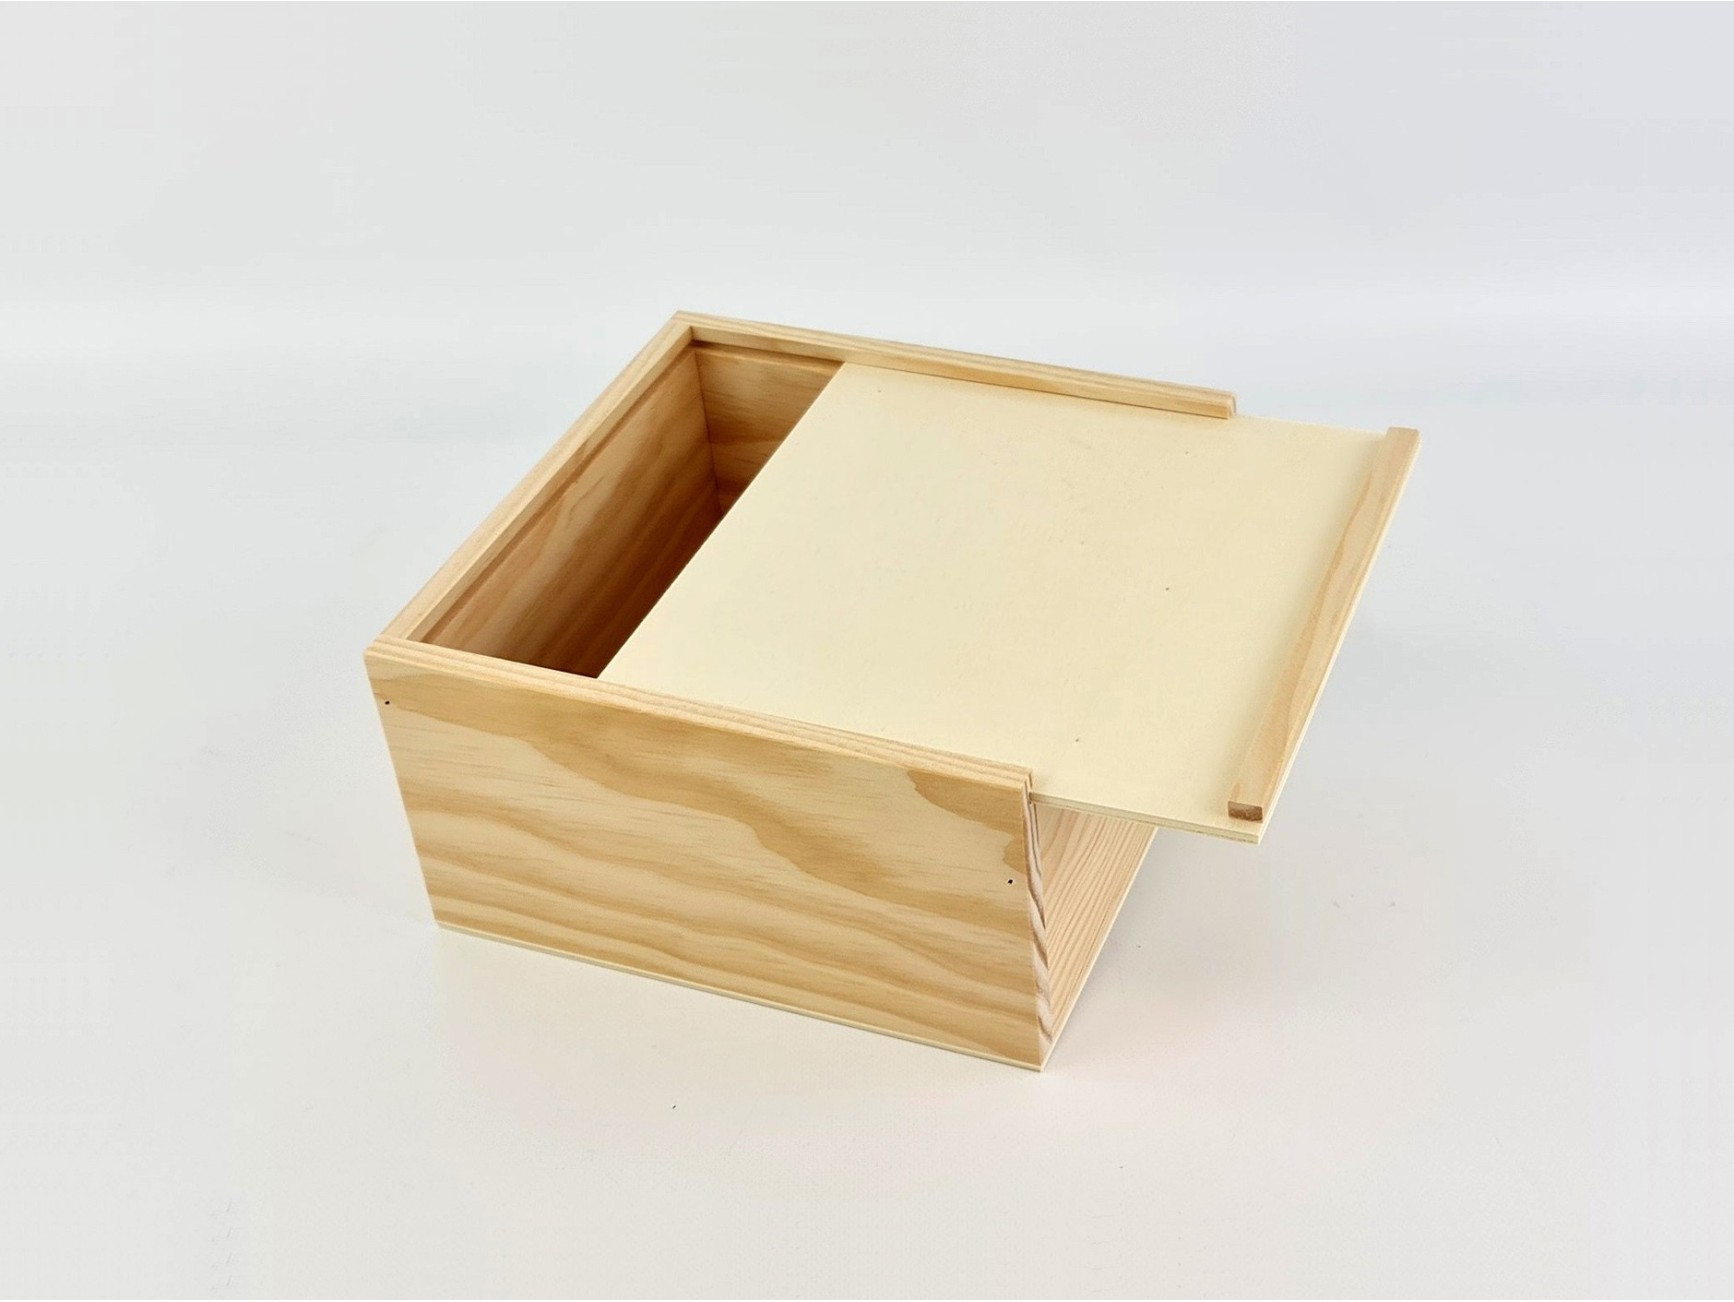 Caja de madera pino 22x22x12 cm. c/tapa corredera Marco Ref.99 - Mabaonline